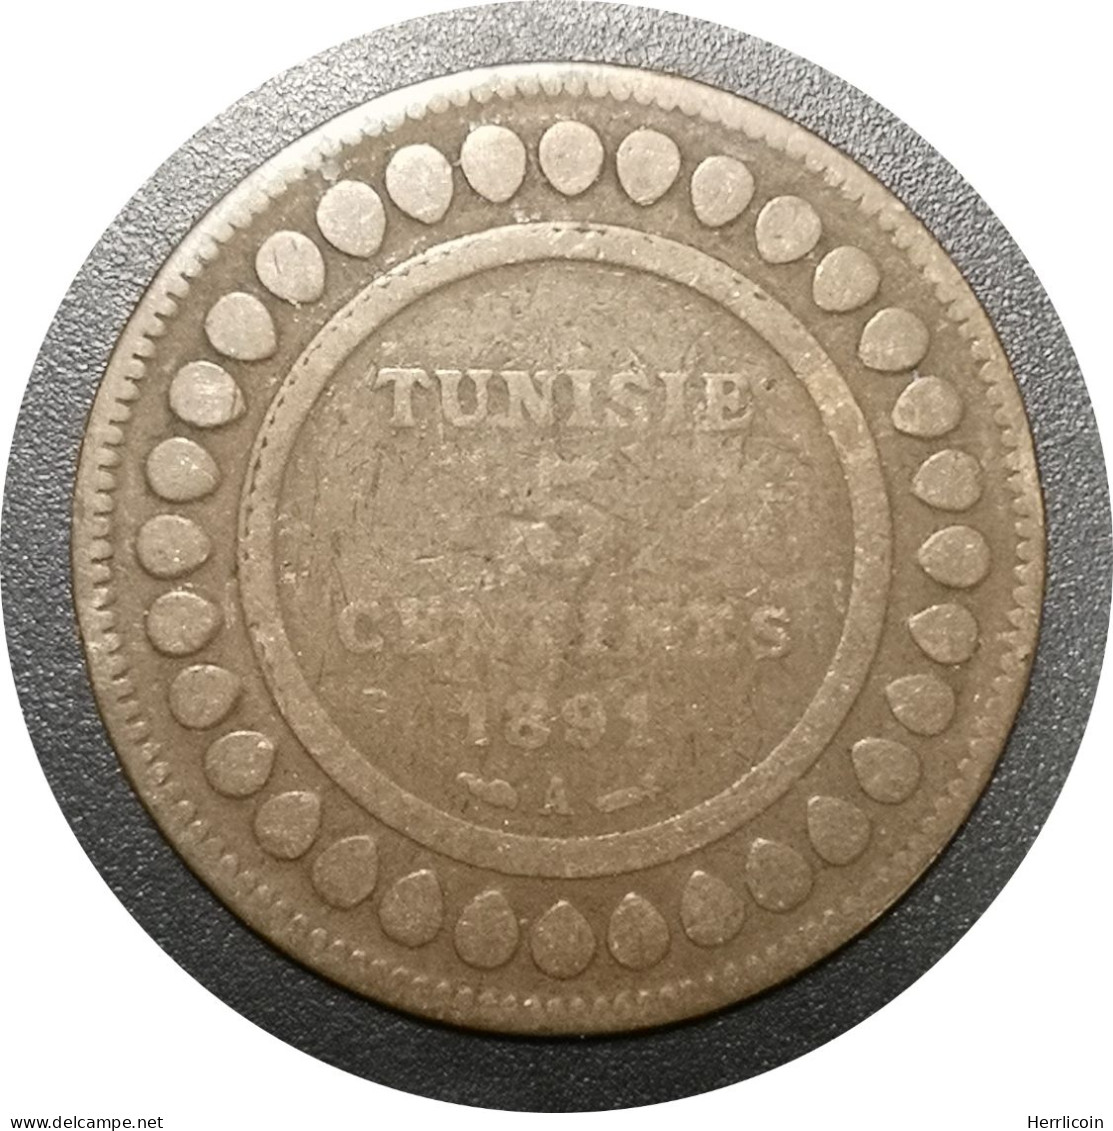 Monnaie Tunisie - 1891 - 5 Centimes Ali Protectorat Français - Tunisia